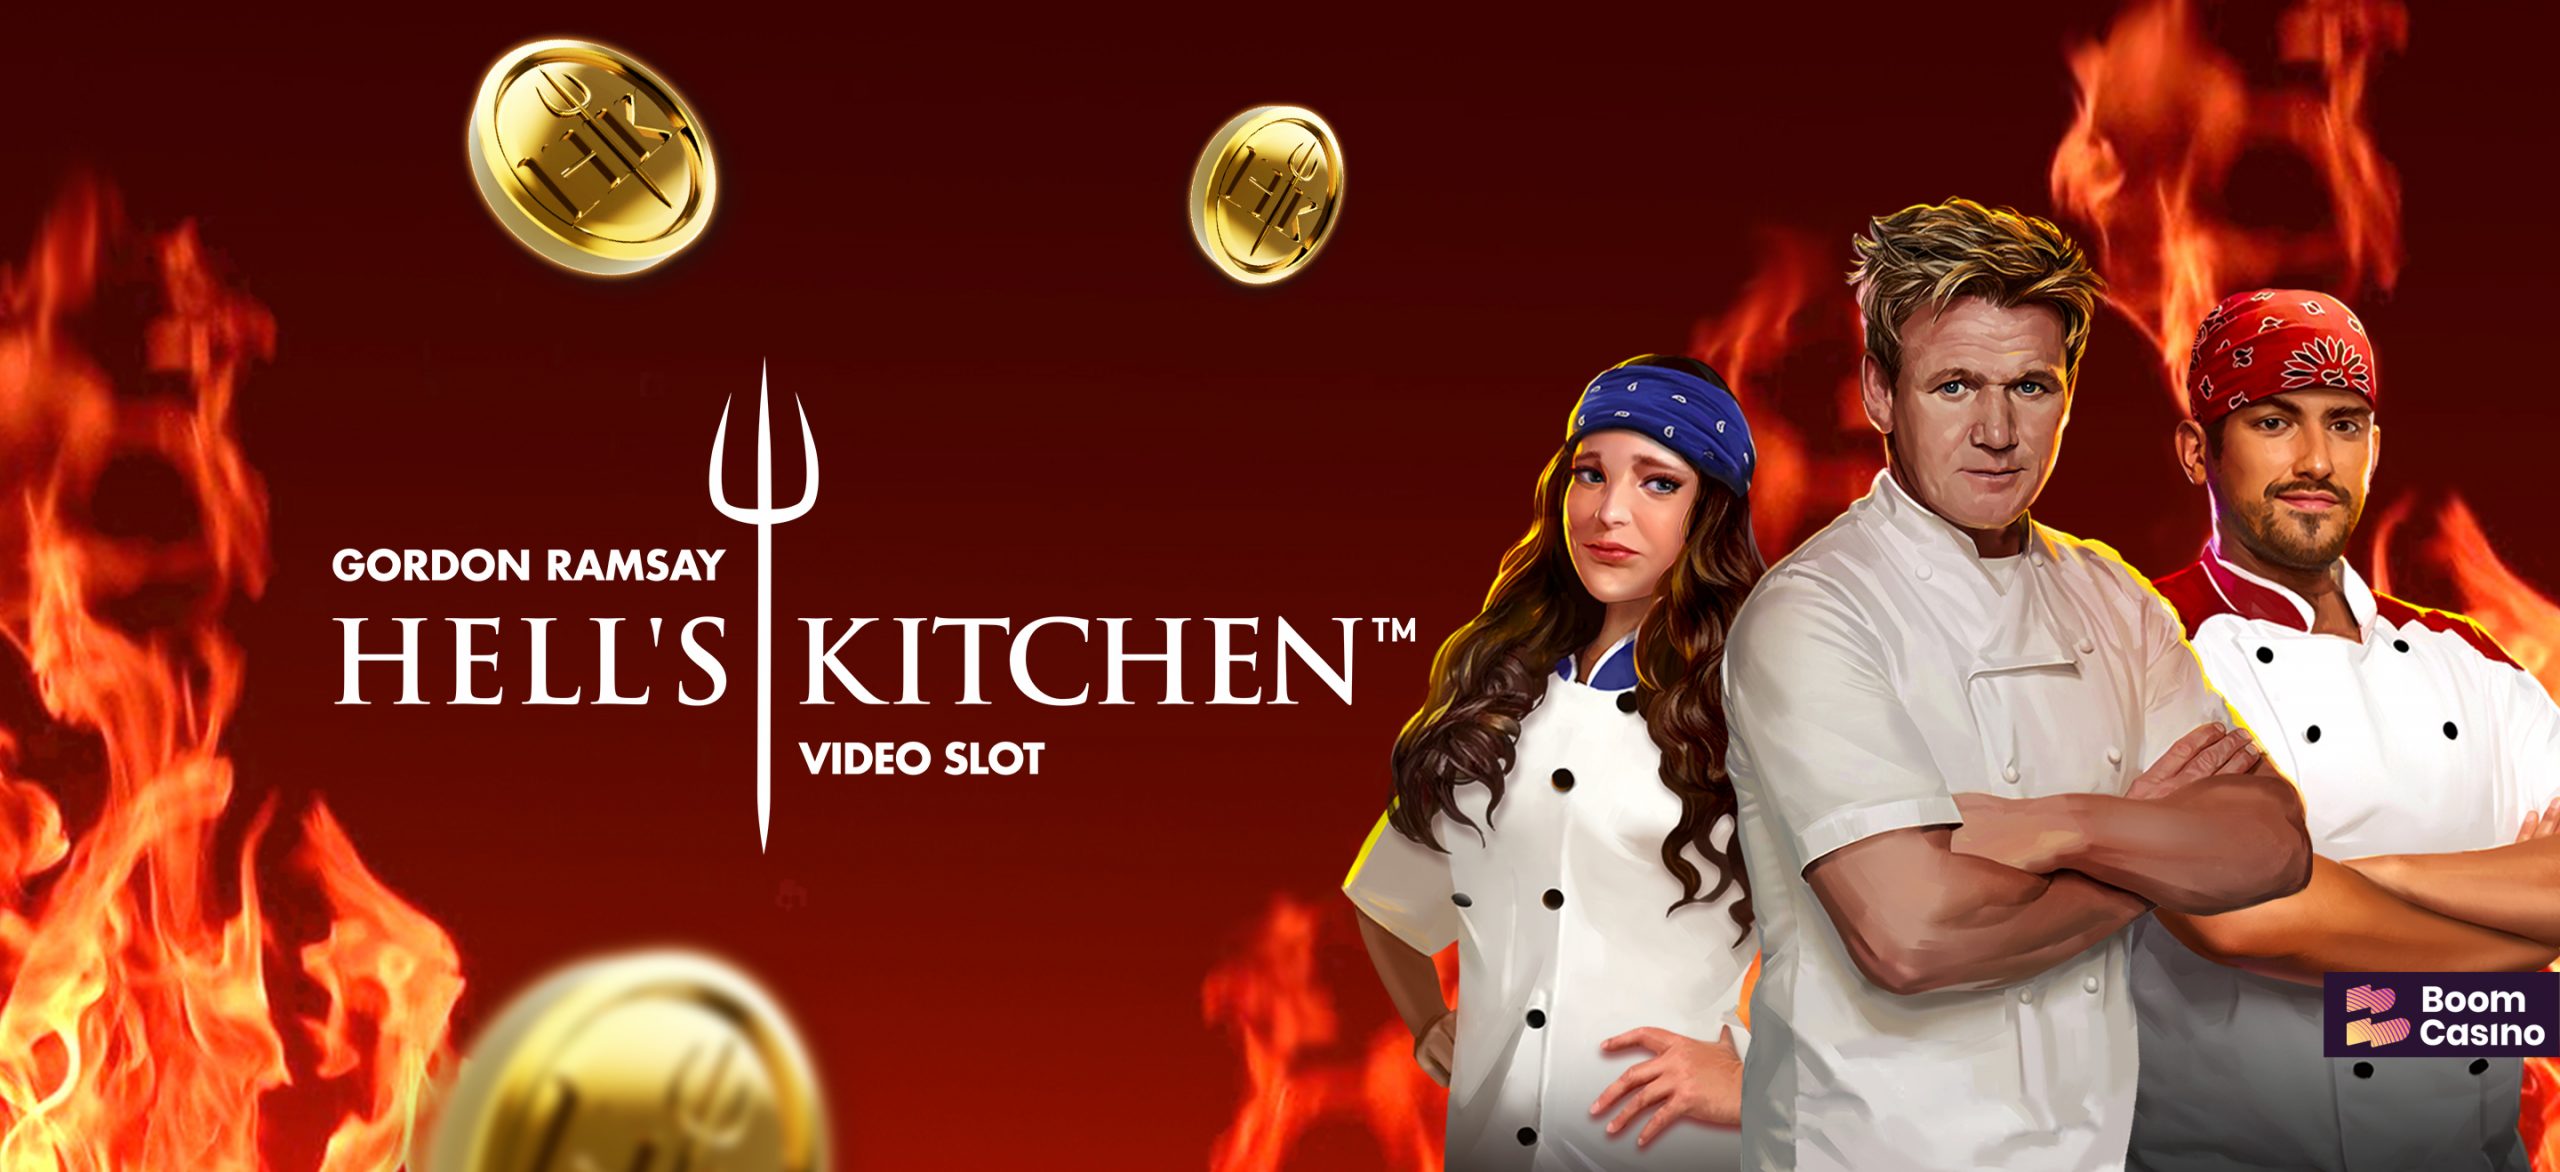 Gordon Ramsay Hell’s Kitchen Video Slot - FanDuel Casino Review